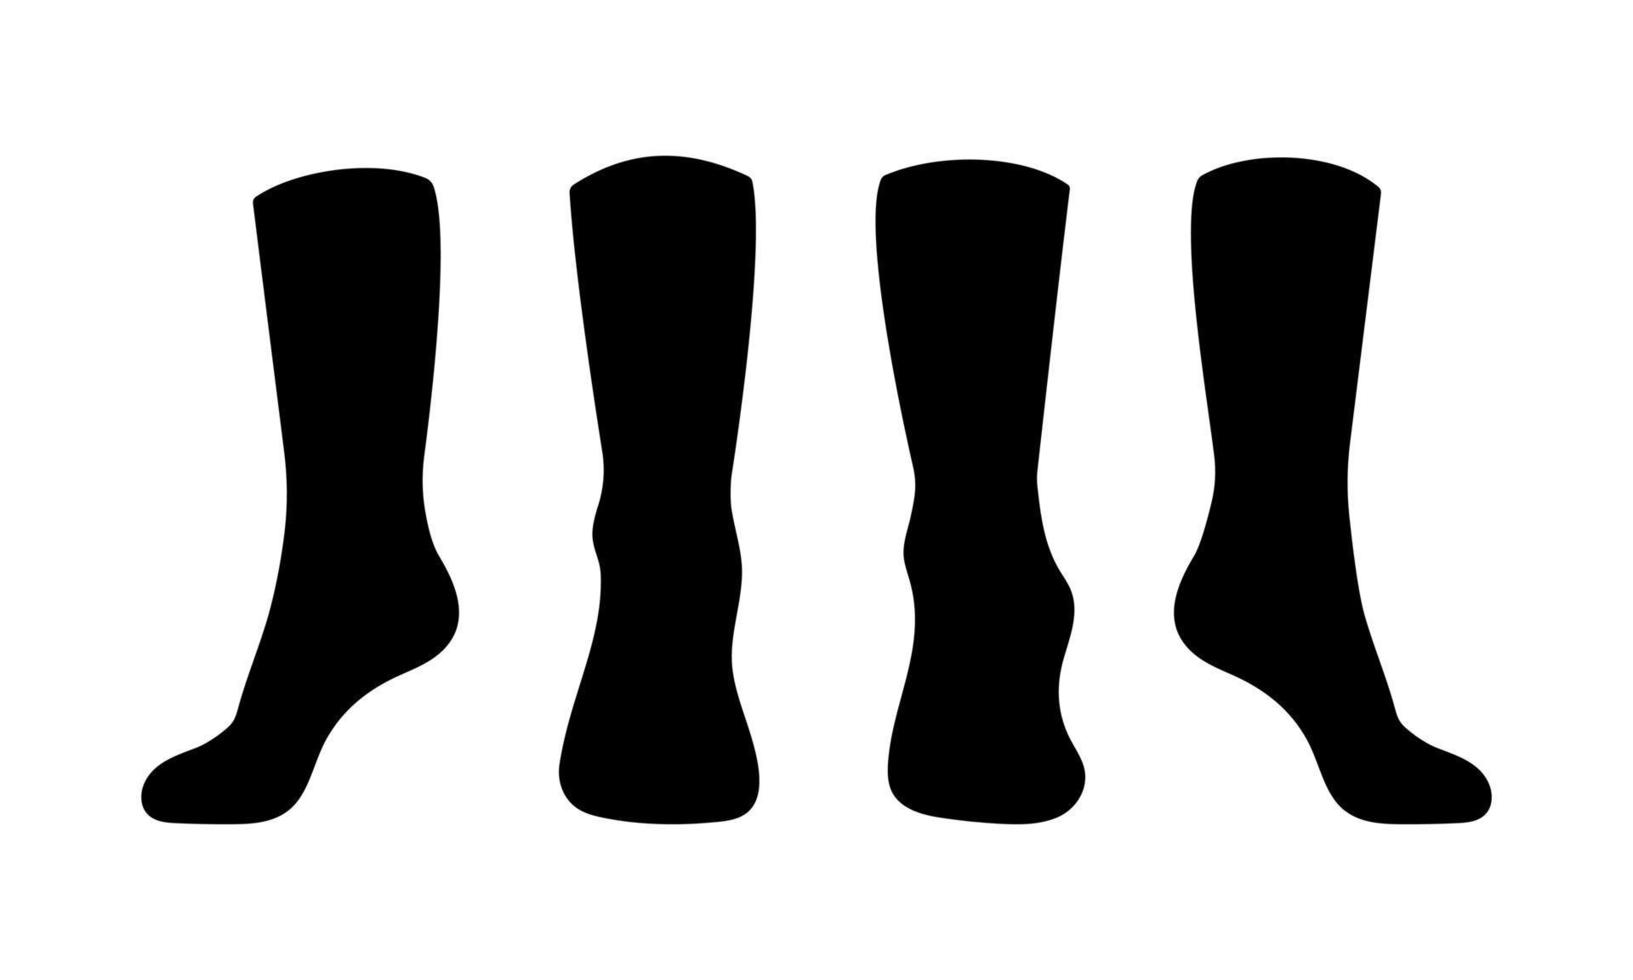 Black socks template mockup flat style design vector illustration set.